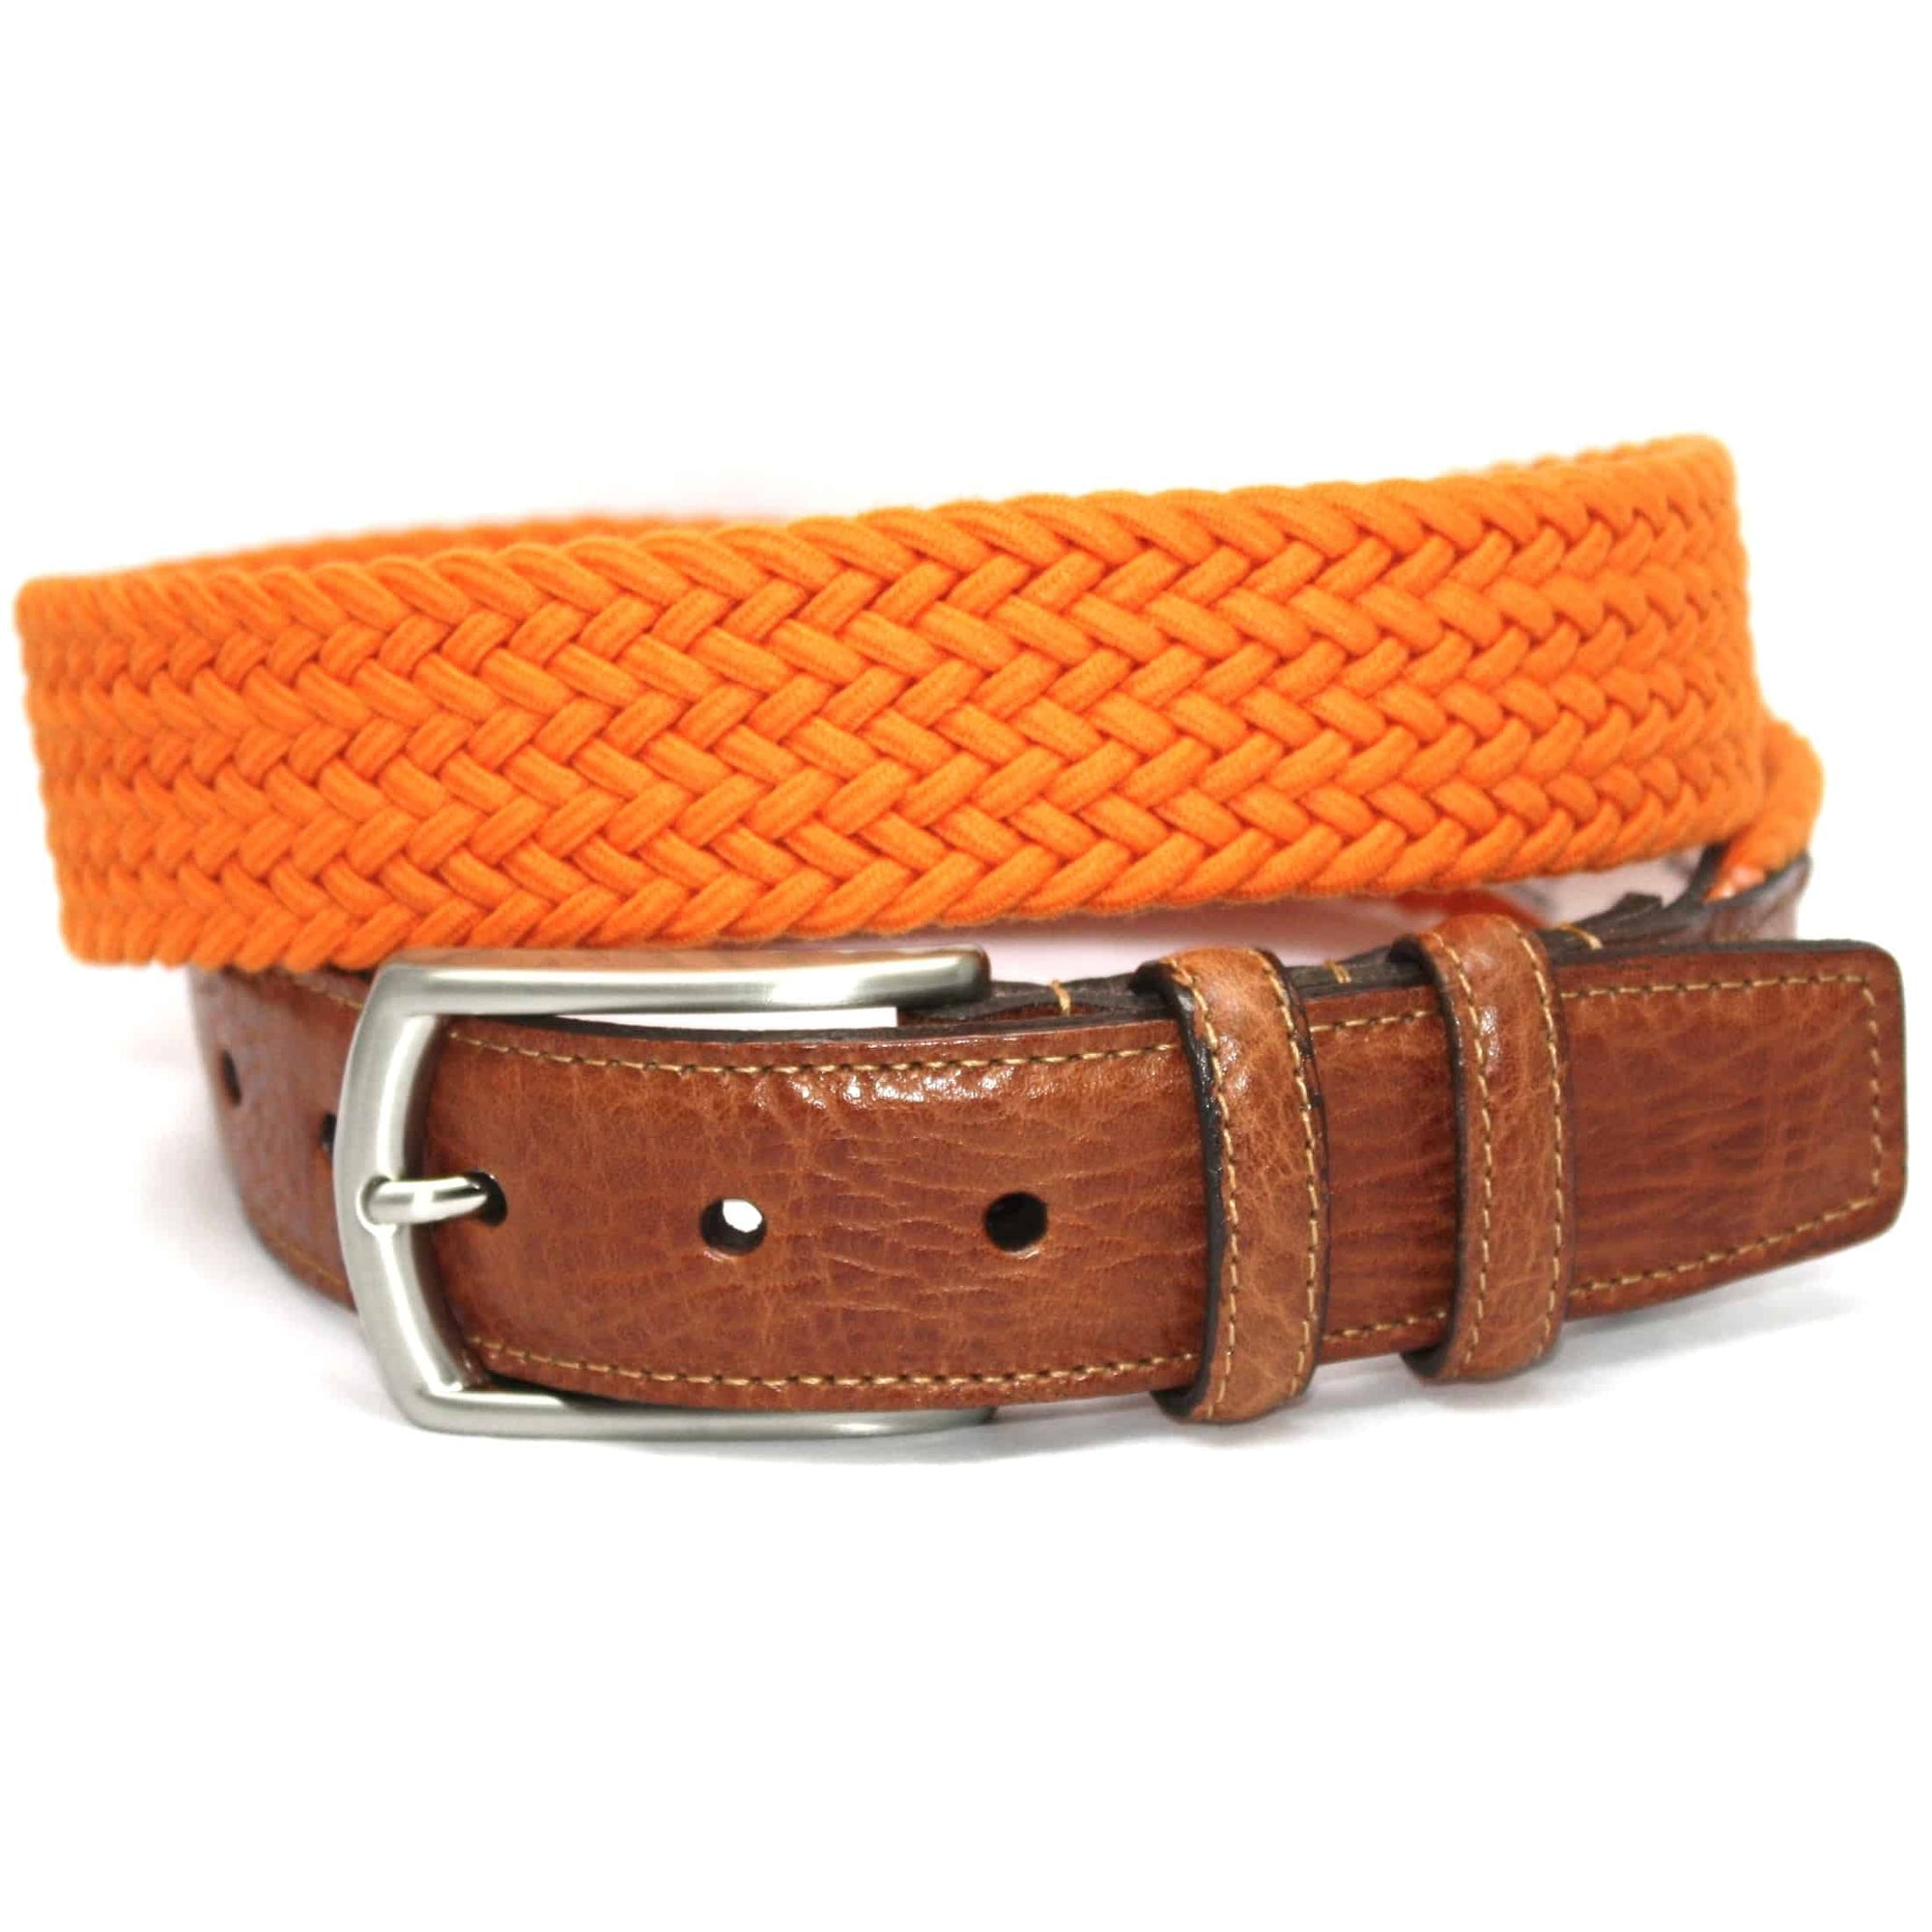 Italian Woven Cotton Elastic Belt in Orange by Torino Leather